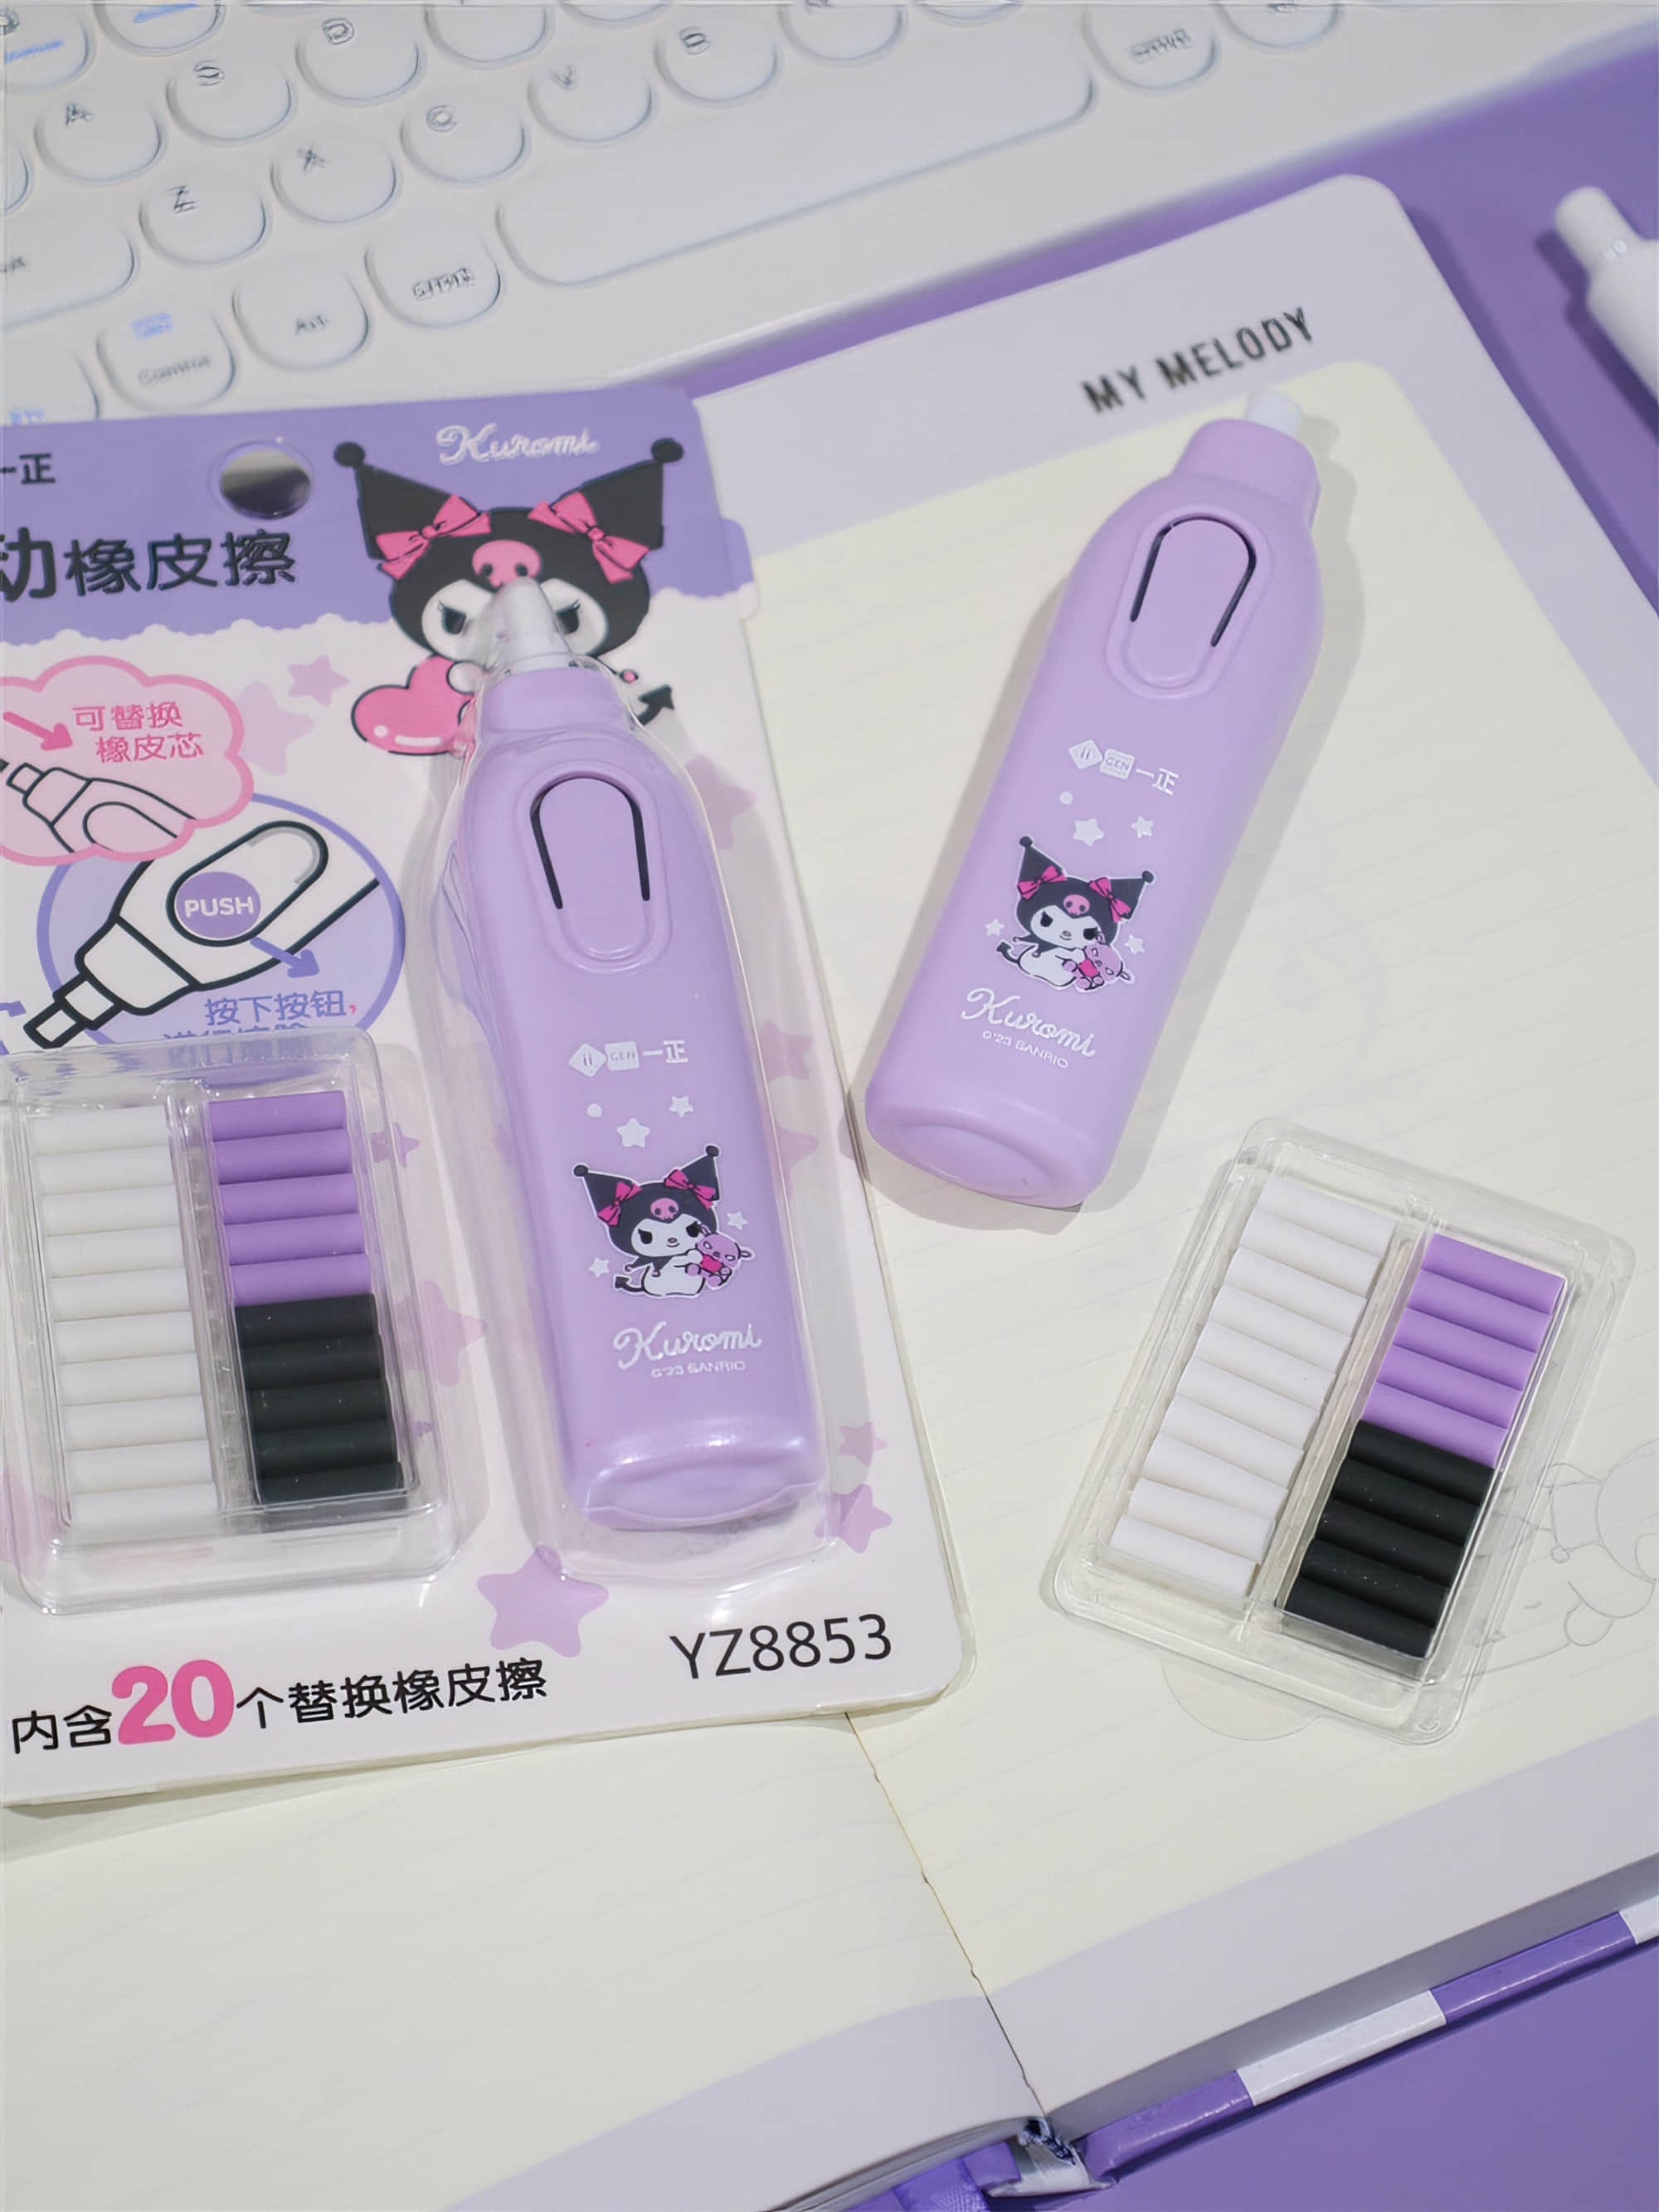 Eraser Pen Ink Remover 3pc Pack Fountain Pens Eradicator Koh-i-noor Ergo  Grip New 